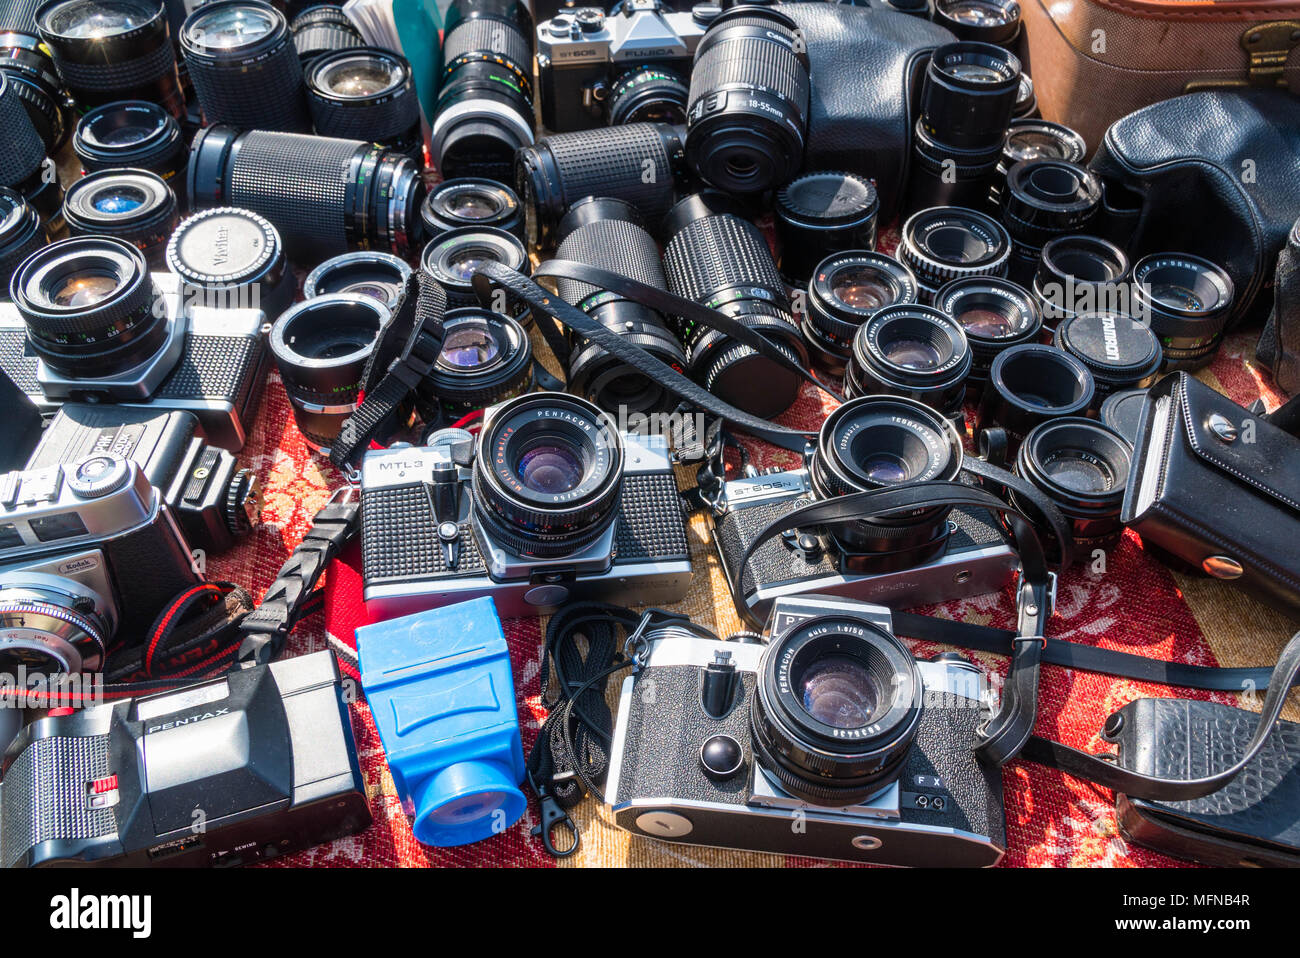 Second hand camera equipment on sale Ludlow street market. Shropshire UK  Stock Photo - Alamy